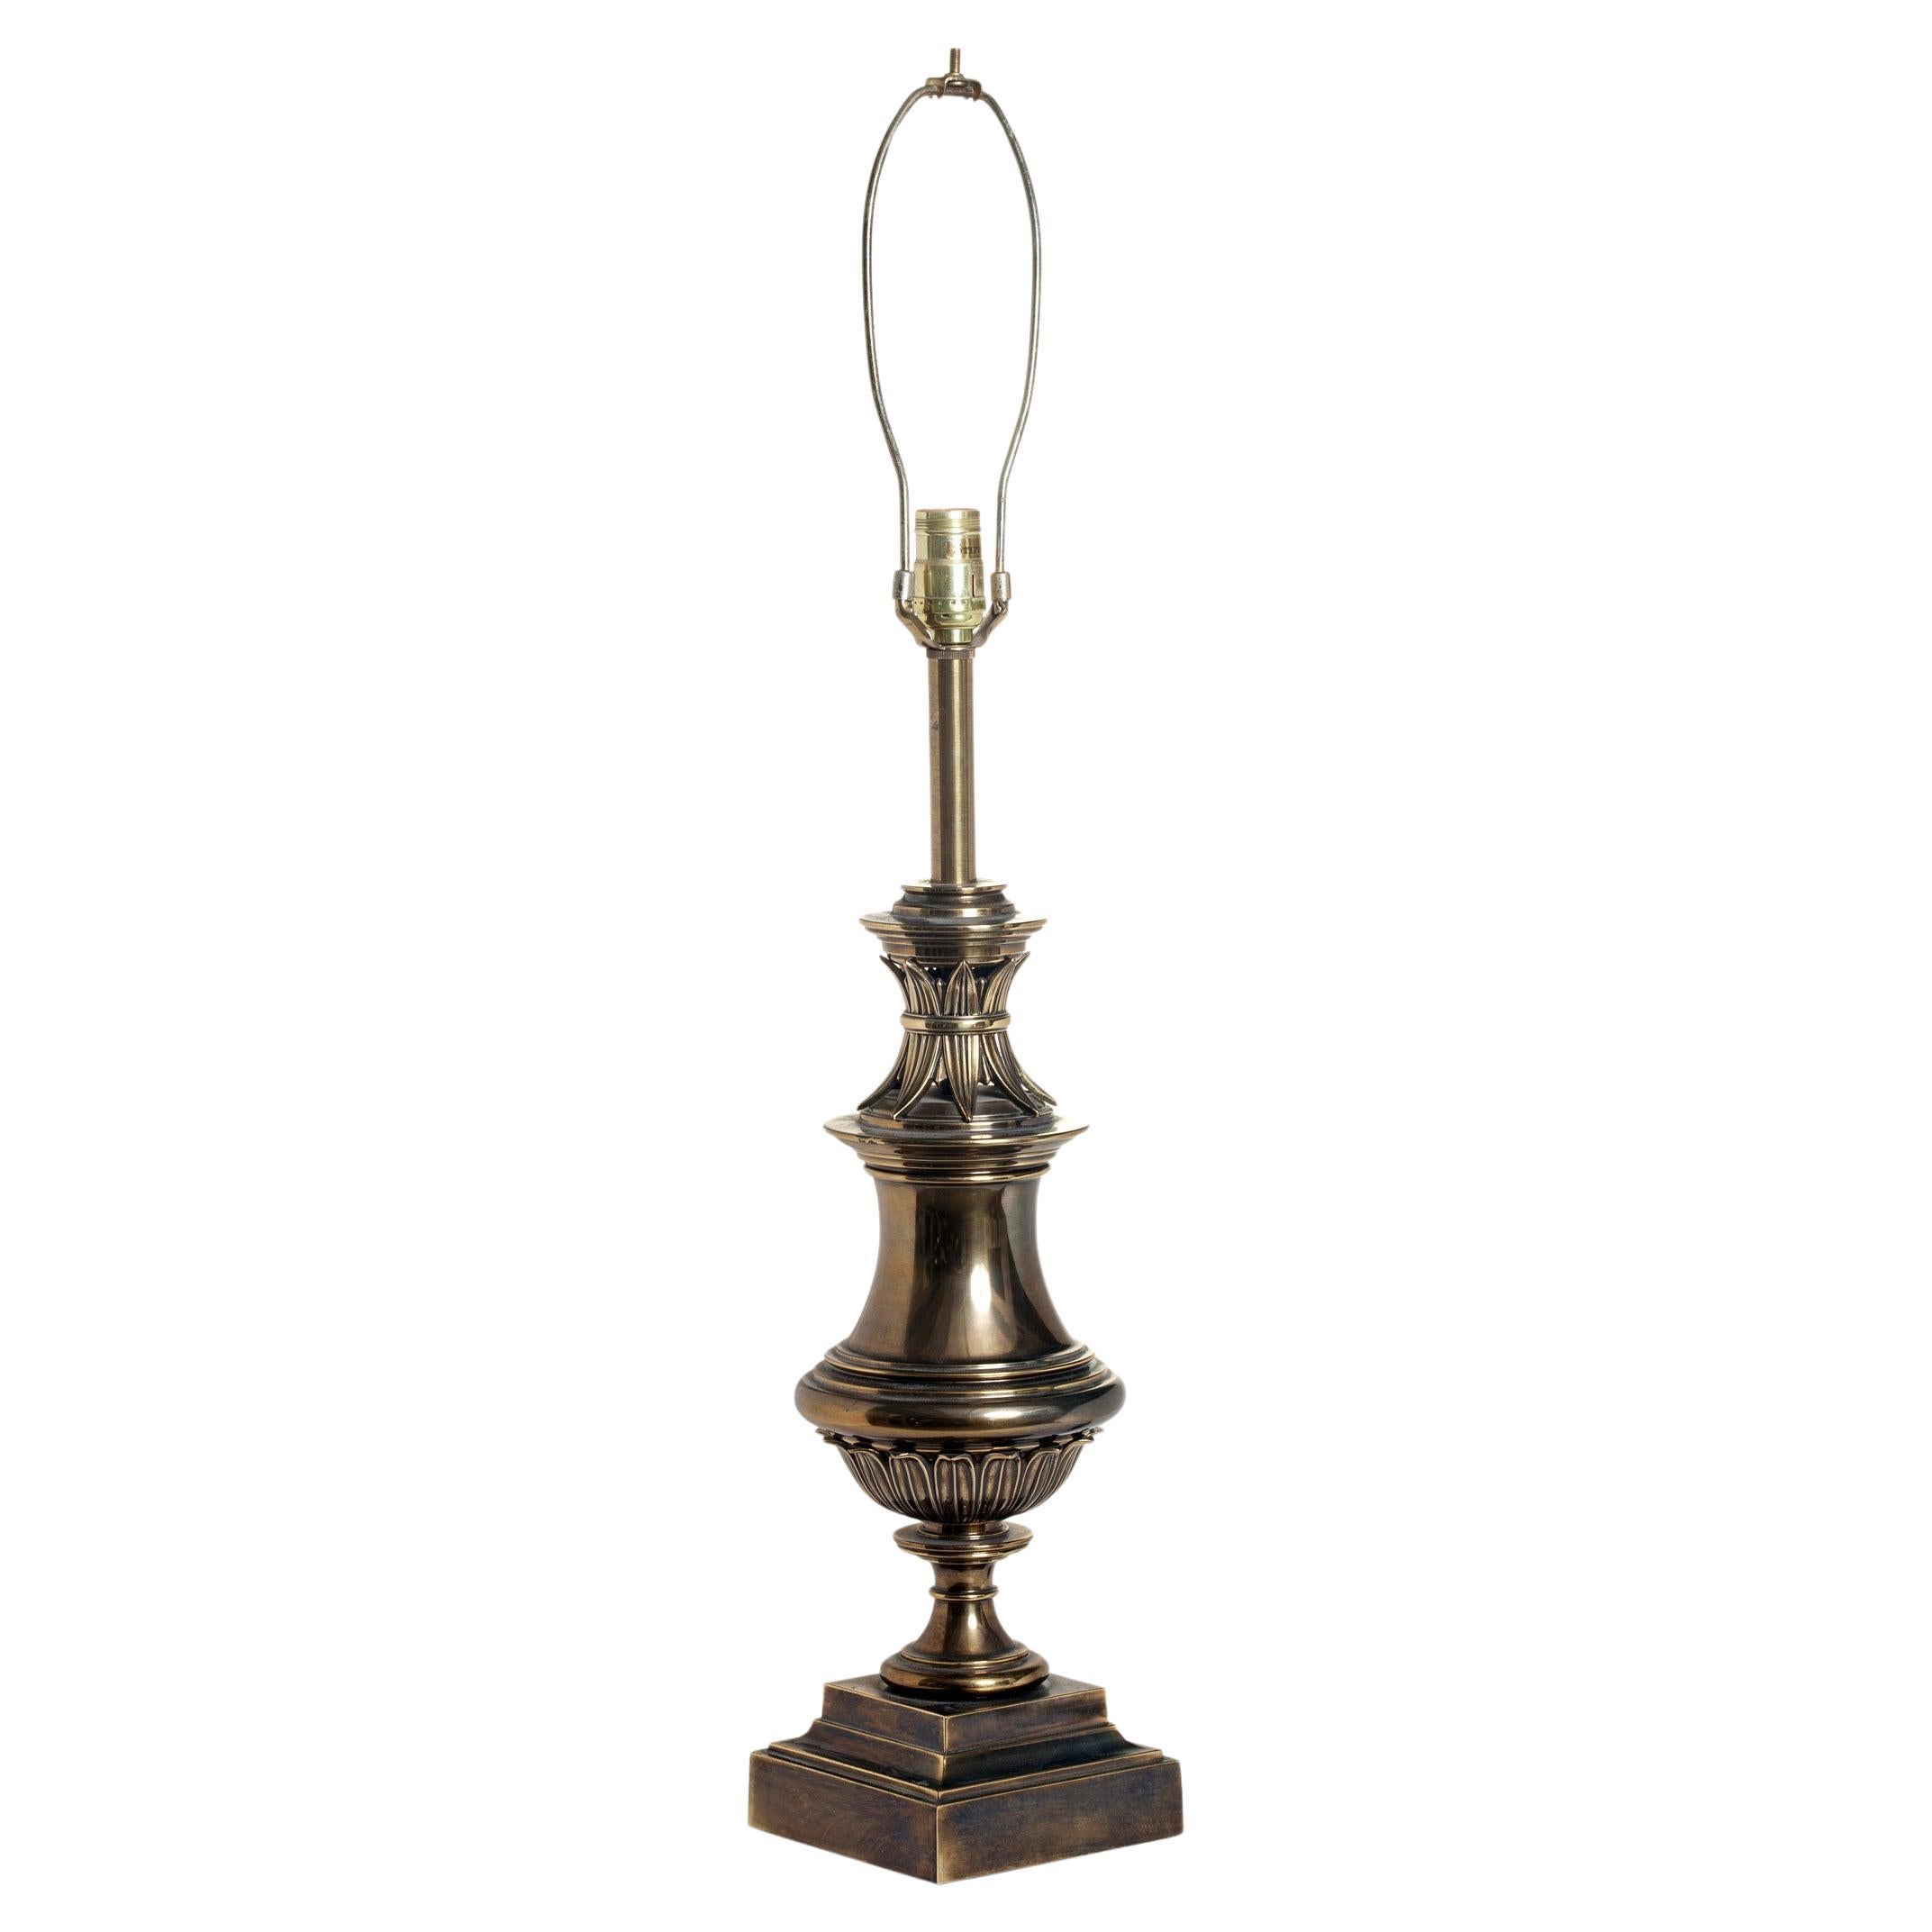 Brass Urn Lamp by Stieffel with Original Midcentury Shade